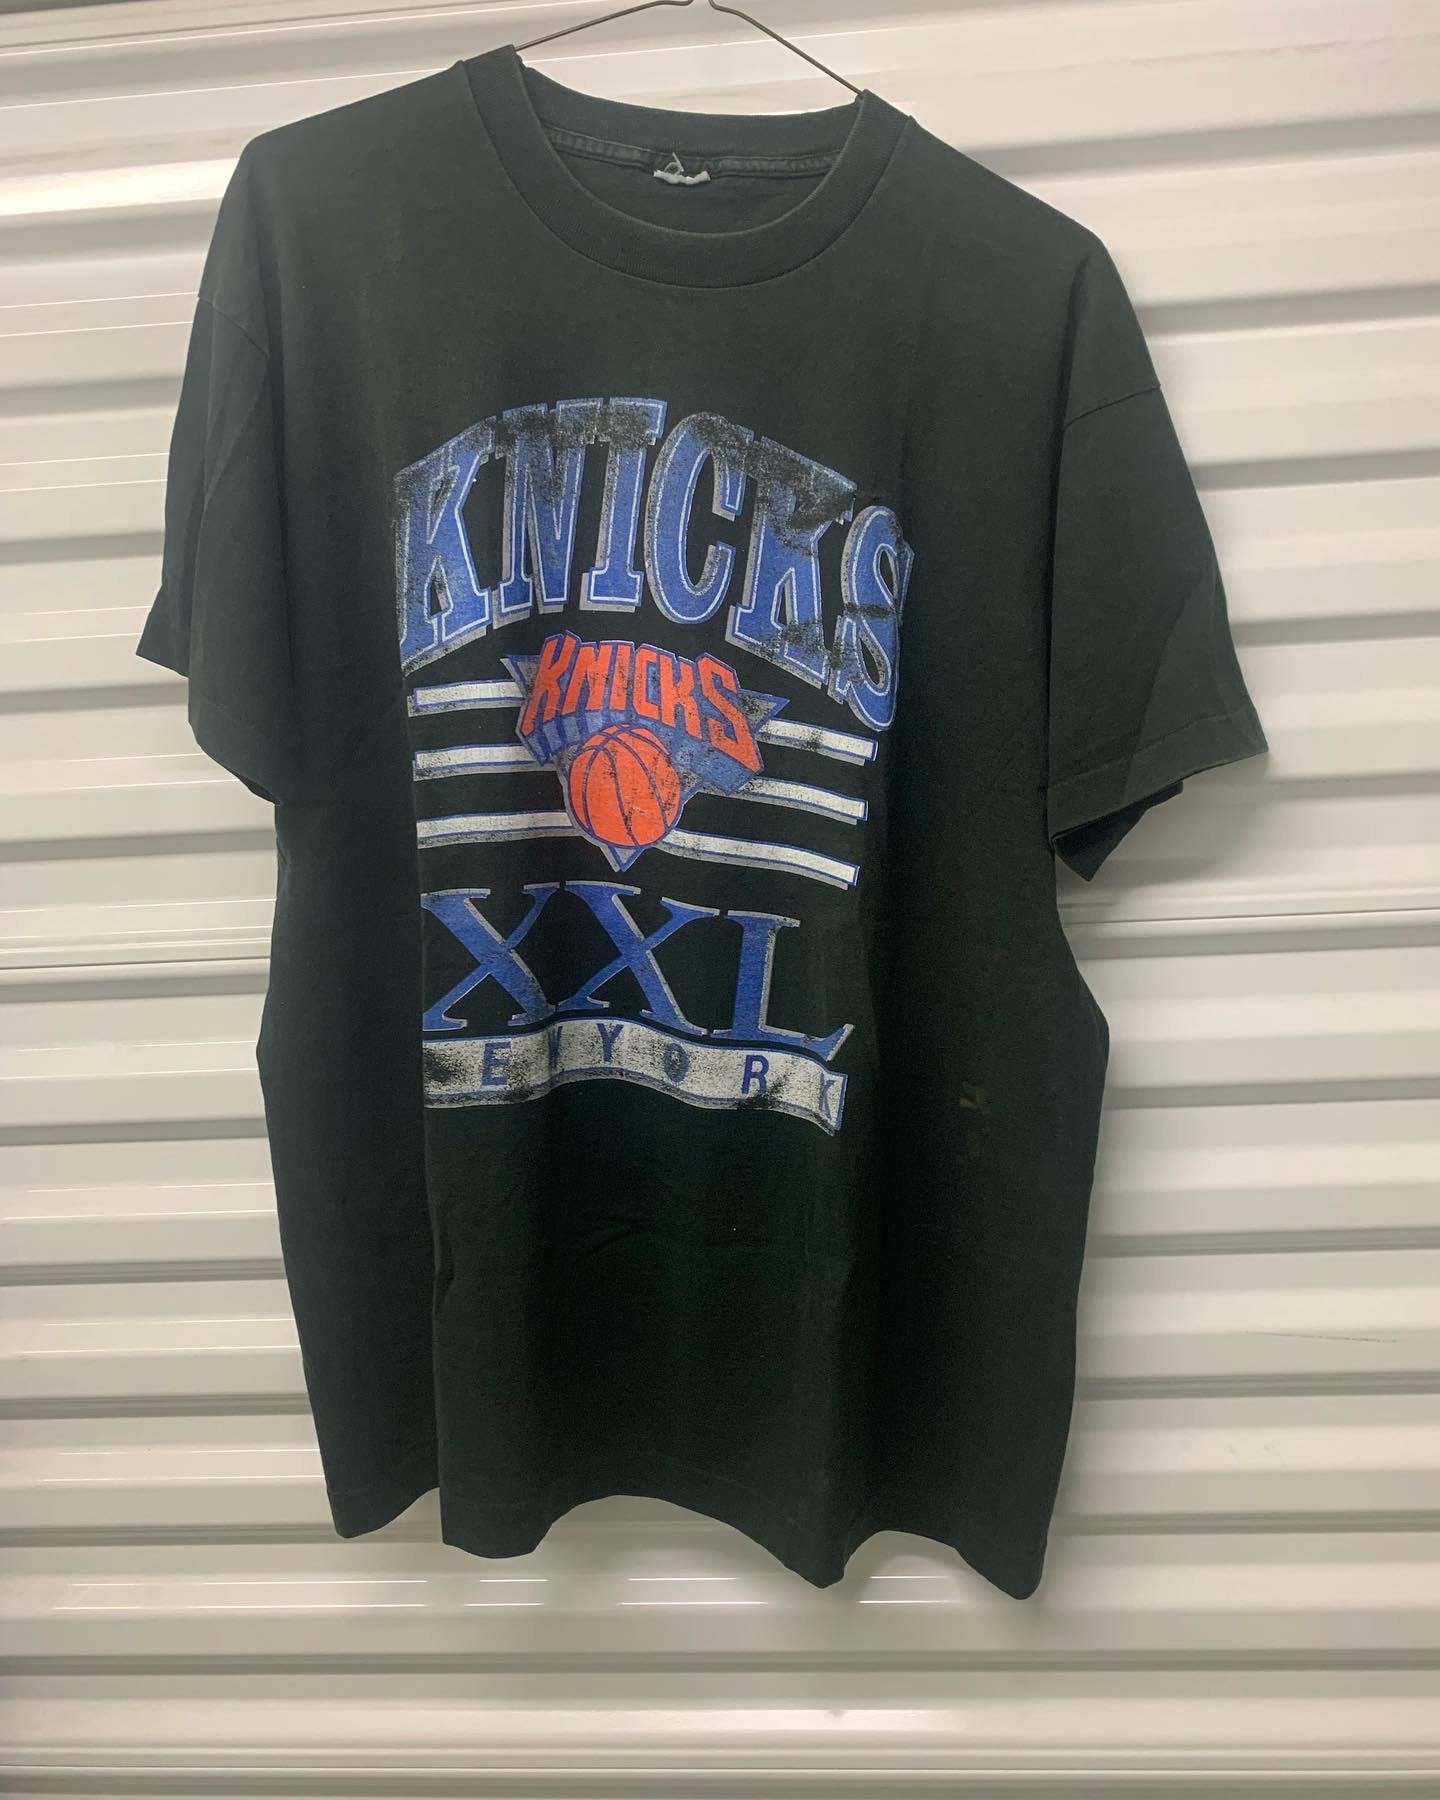 New York Knicks Logo Shirt - High-Quality Printed Brand